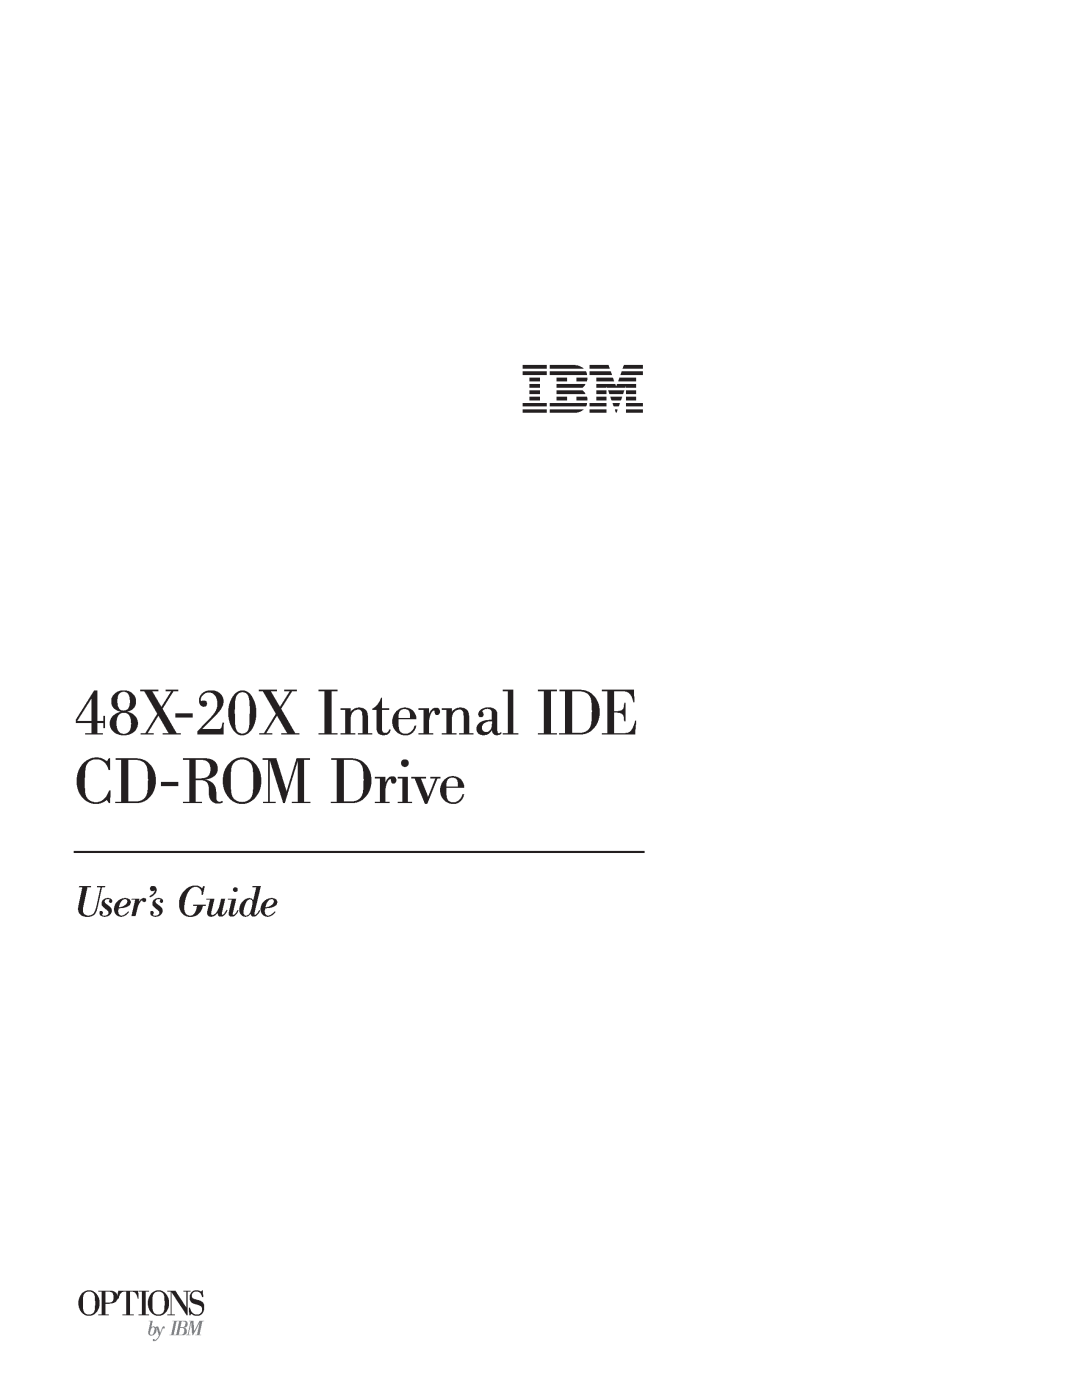 IBM manual 48X-20X Internal IDE CD-ROM Drive, Users Guide, Options, by IBM 